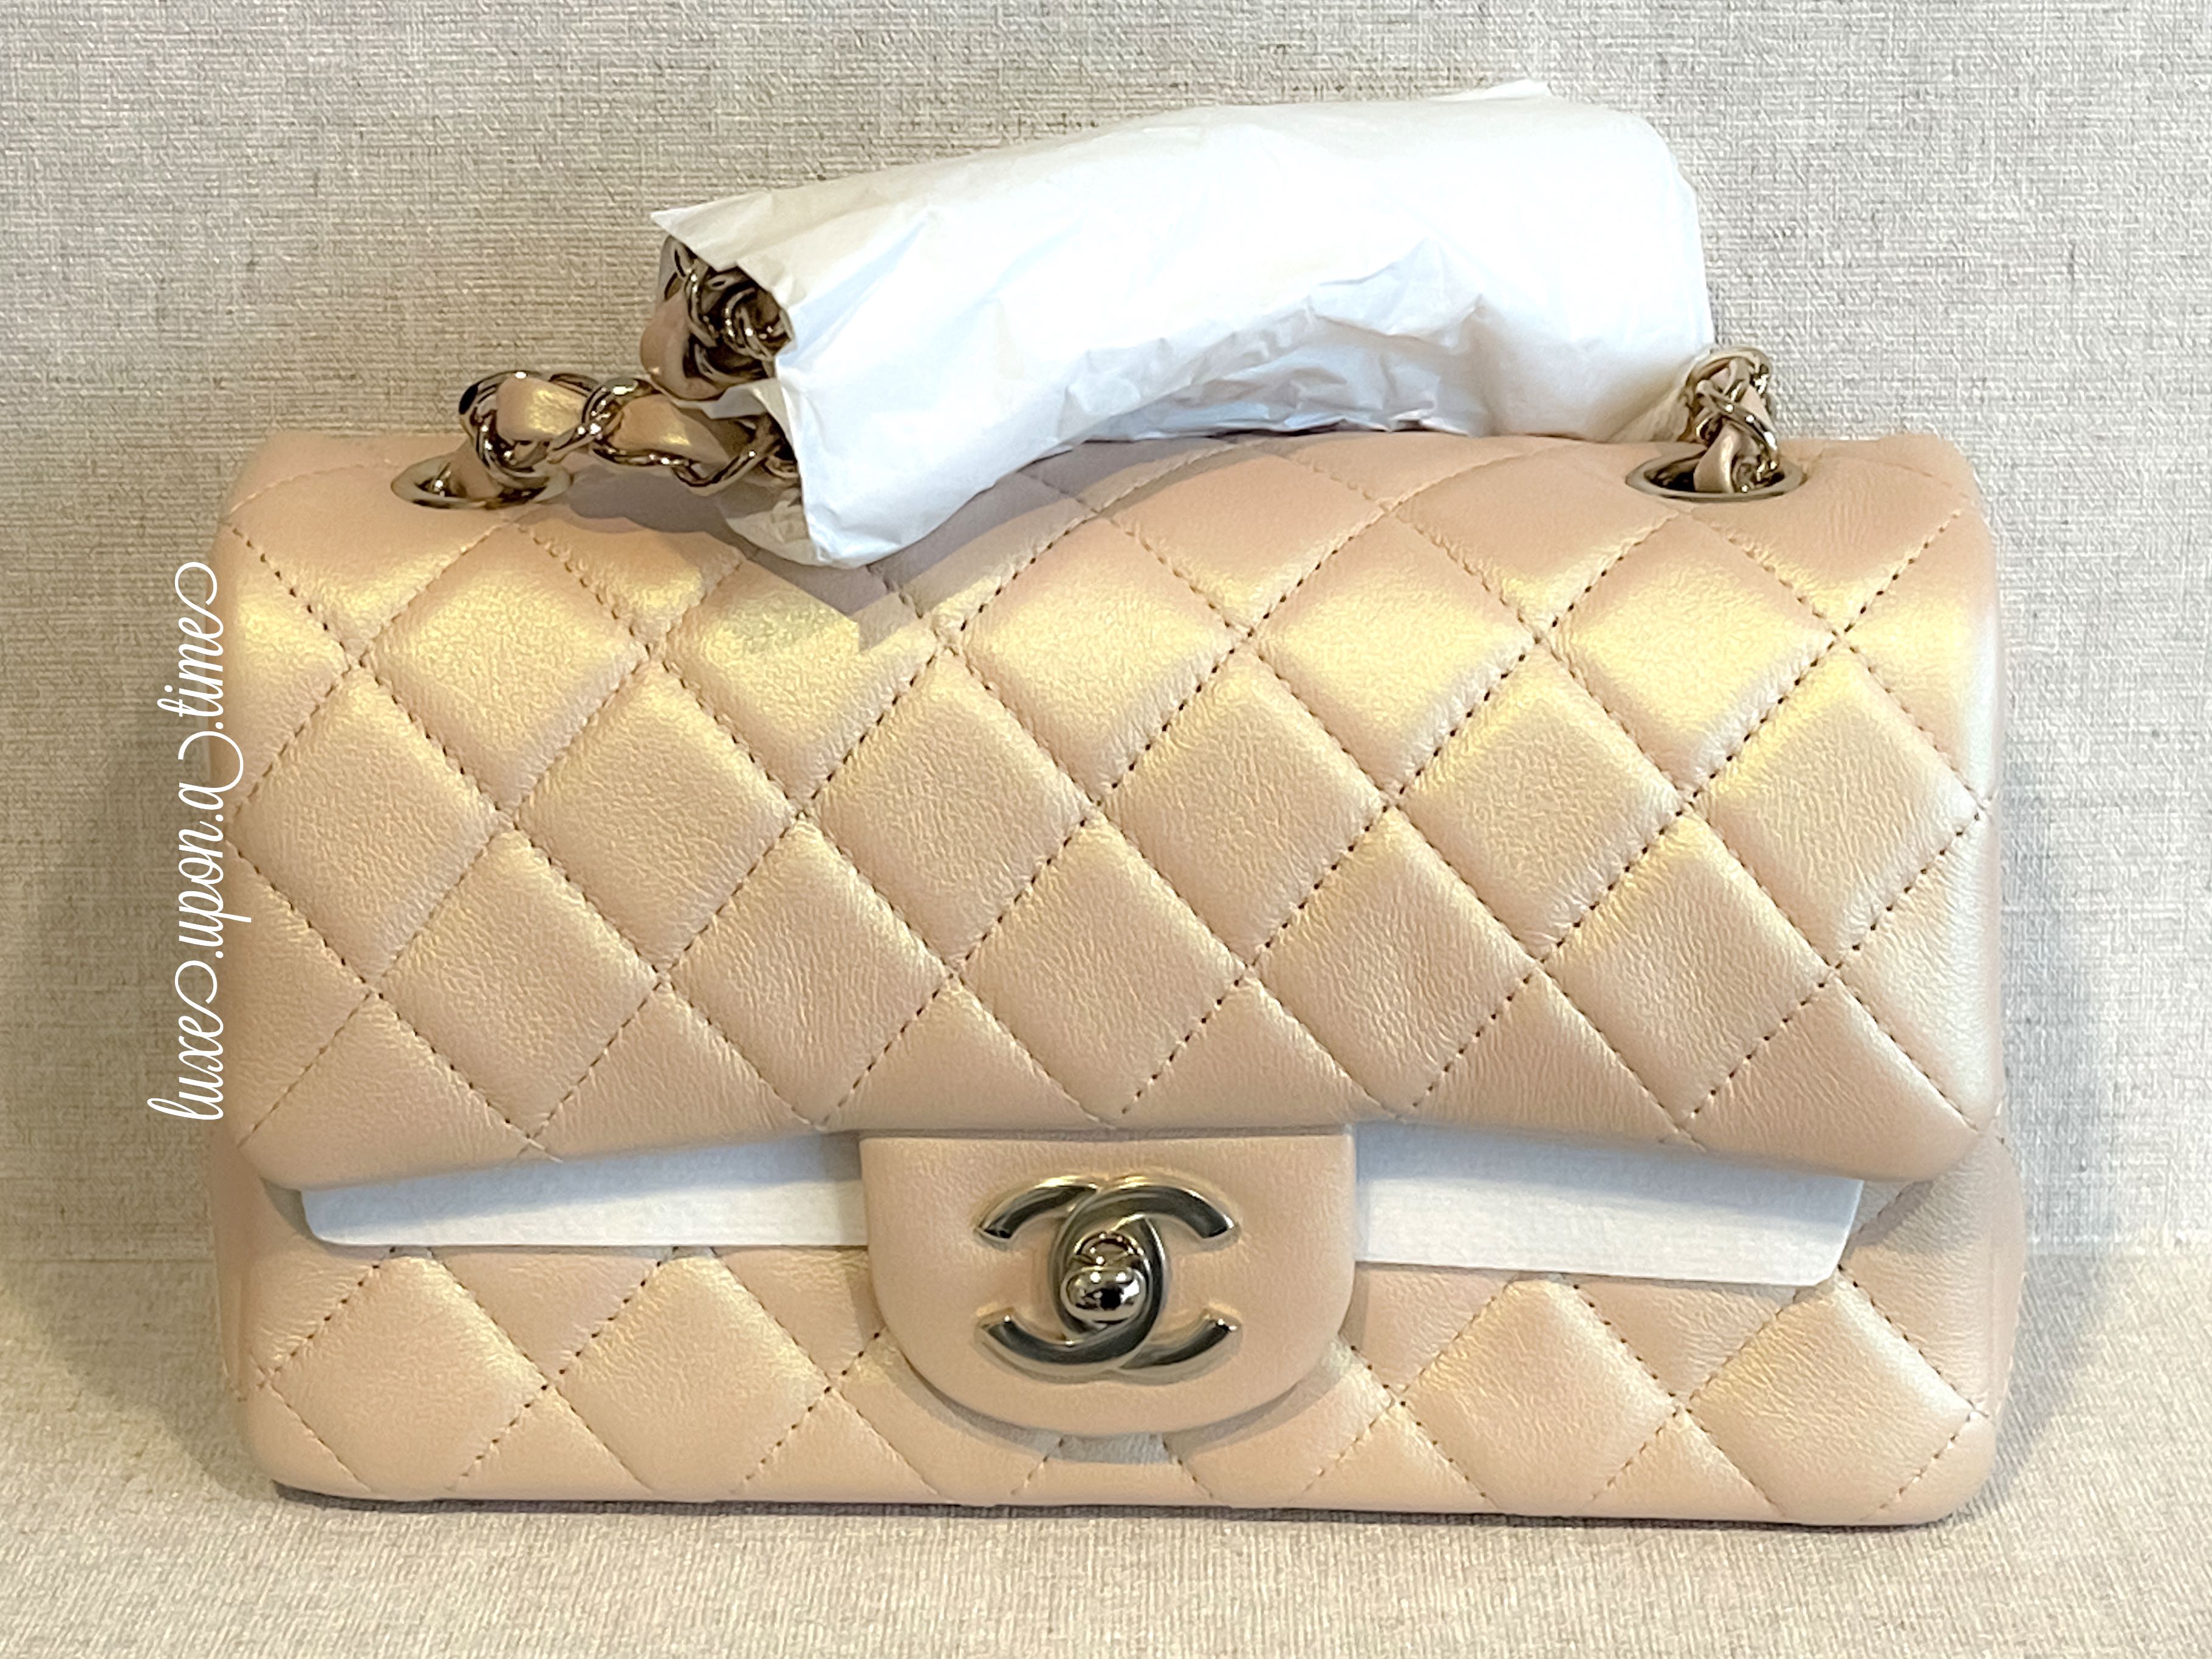 Chanel 21S IRIDESCENT Beige Zipped CARD HOLDER Lambskin Leather Unboxing  @luxurypl3847 